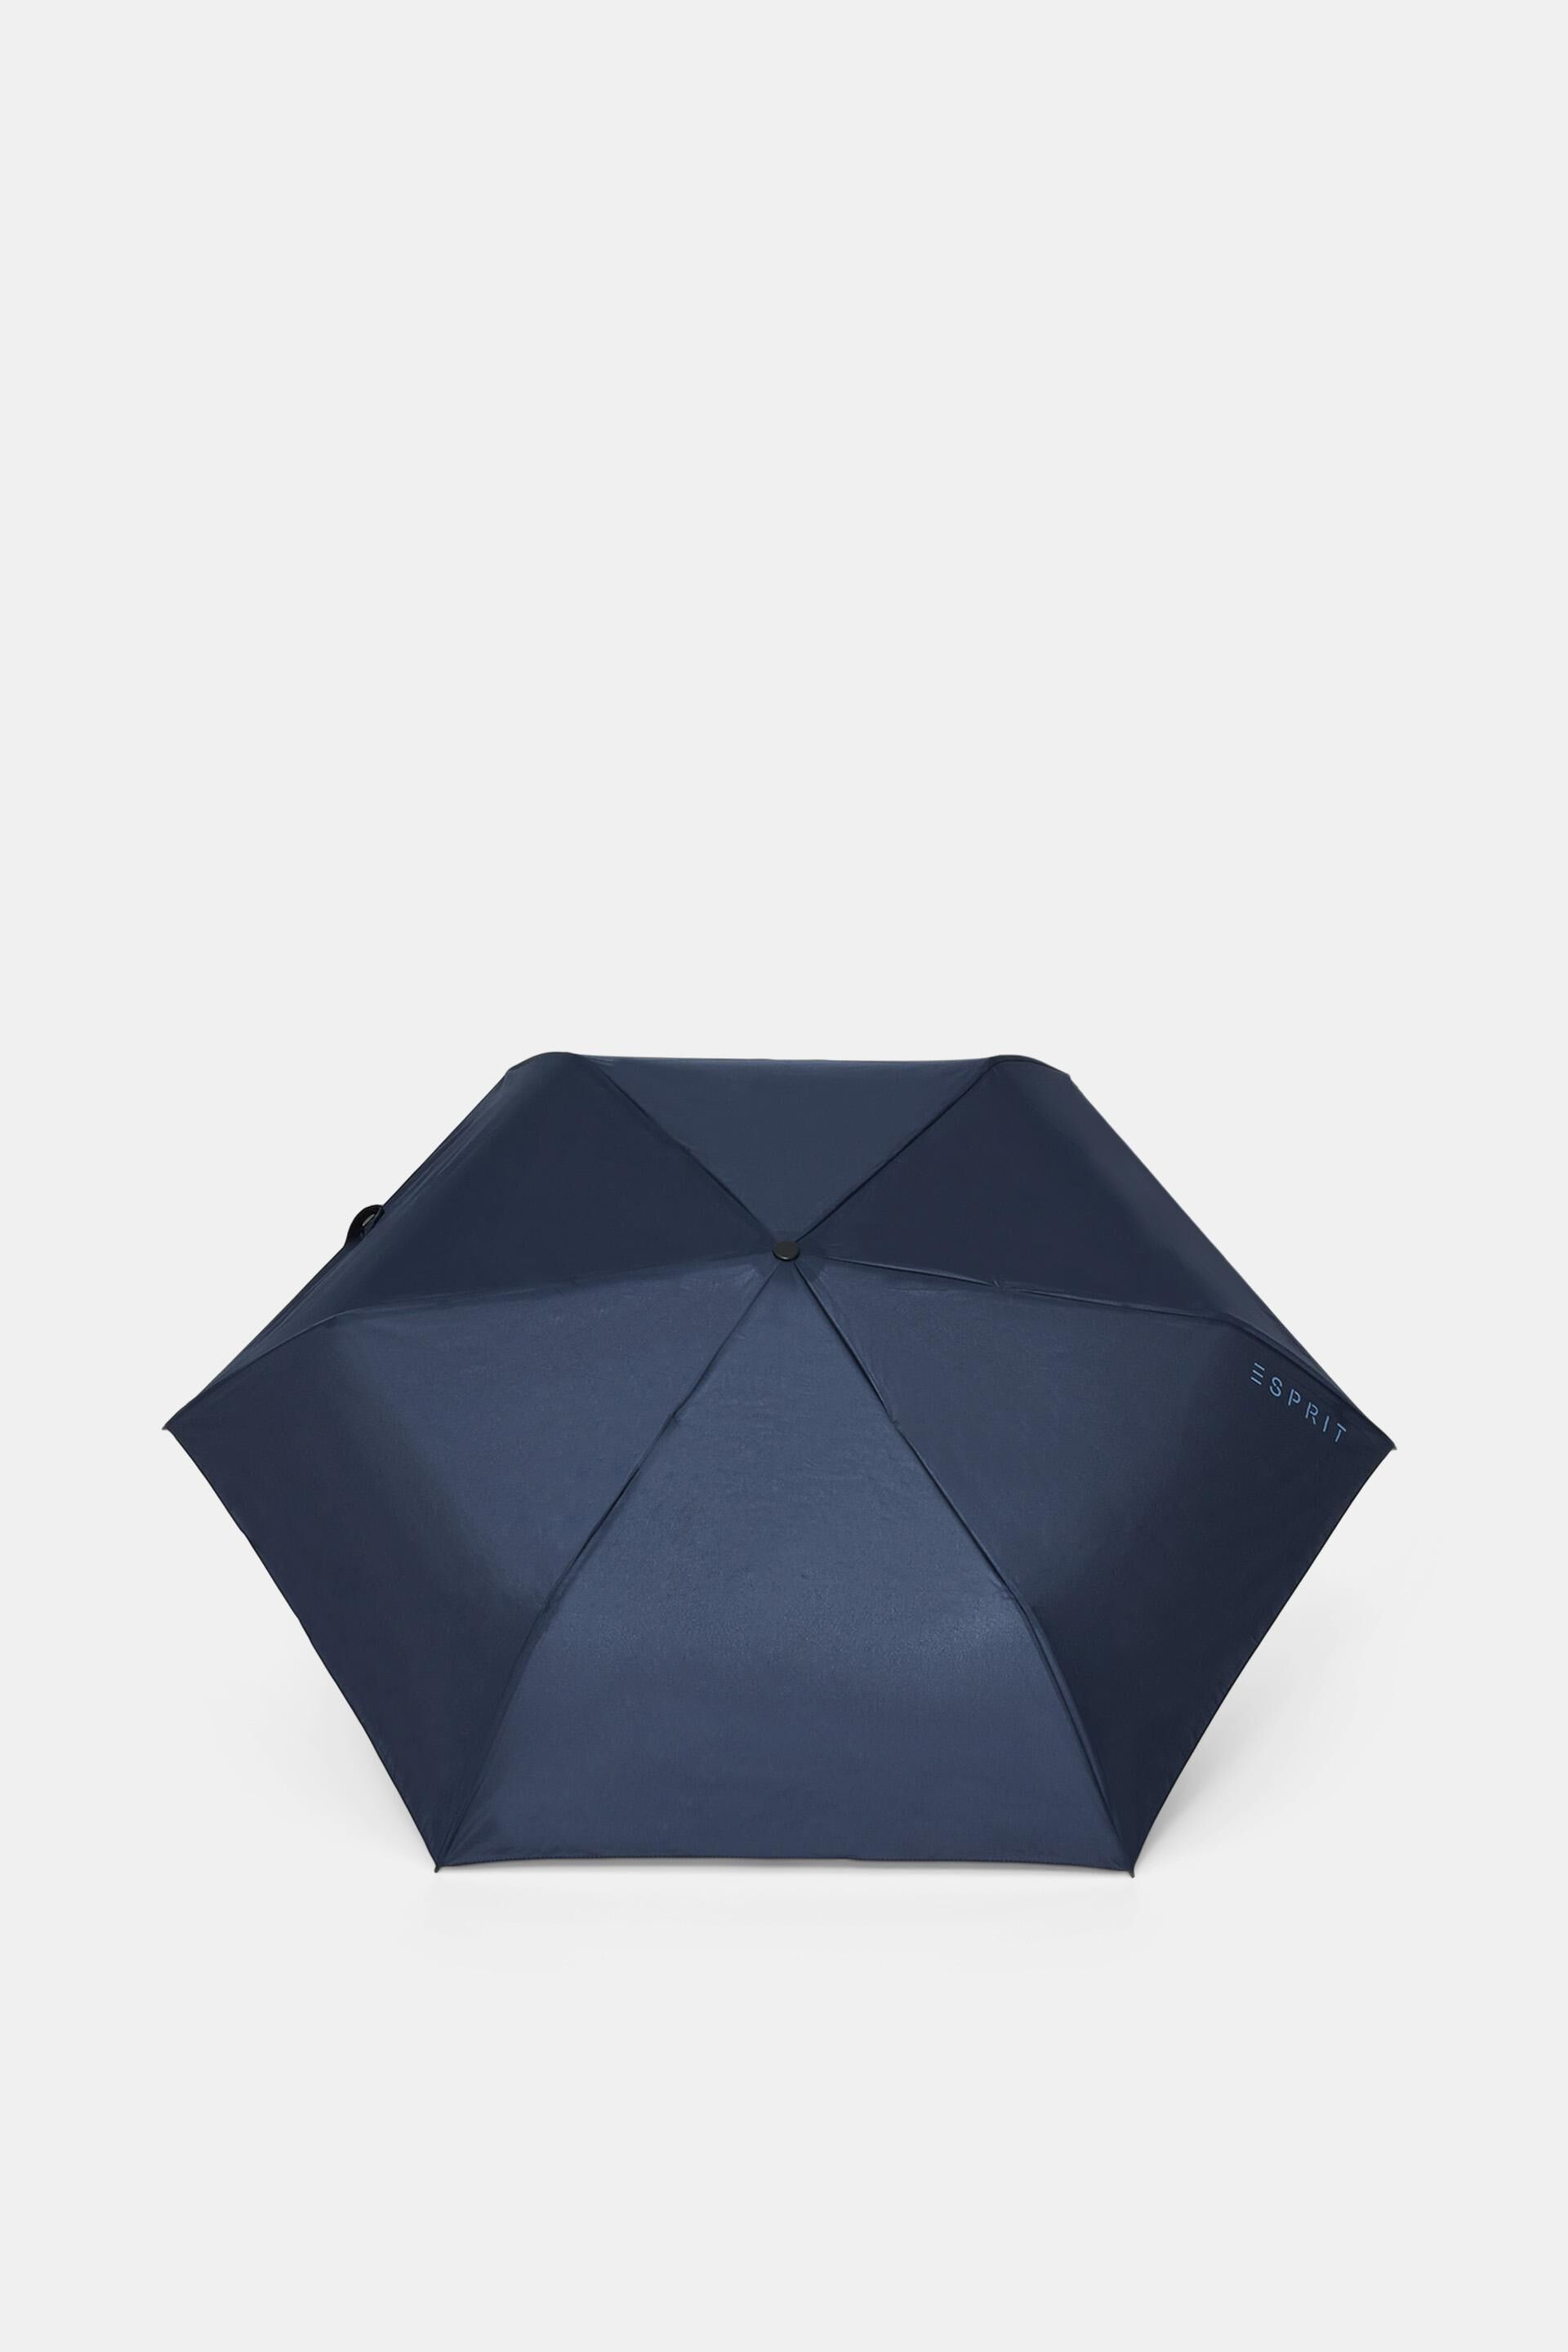 Esprit Online Store Easymatic slimline pocket umbrella in blue